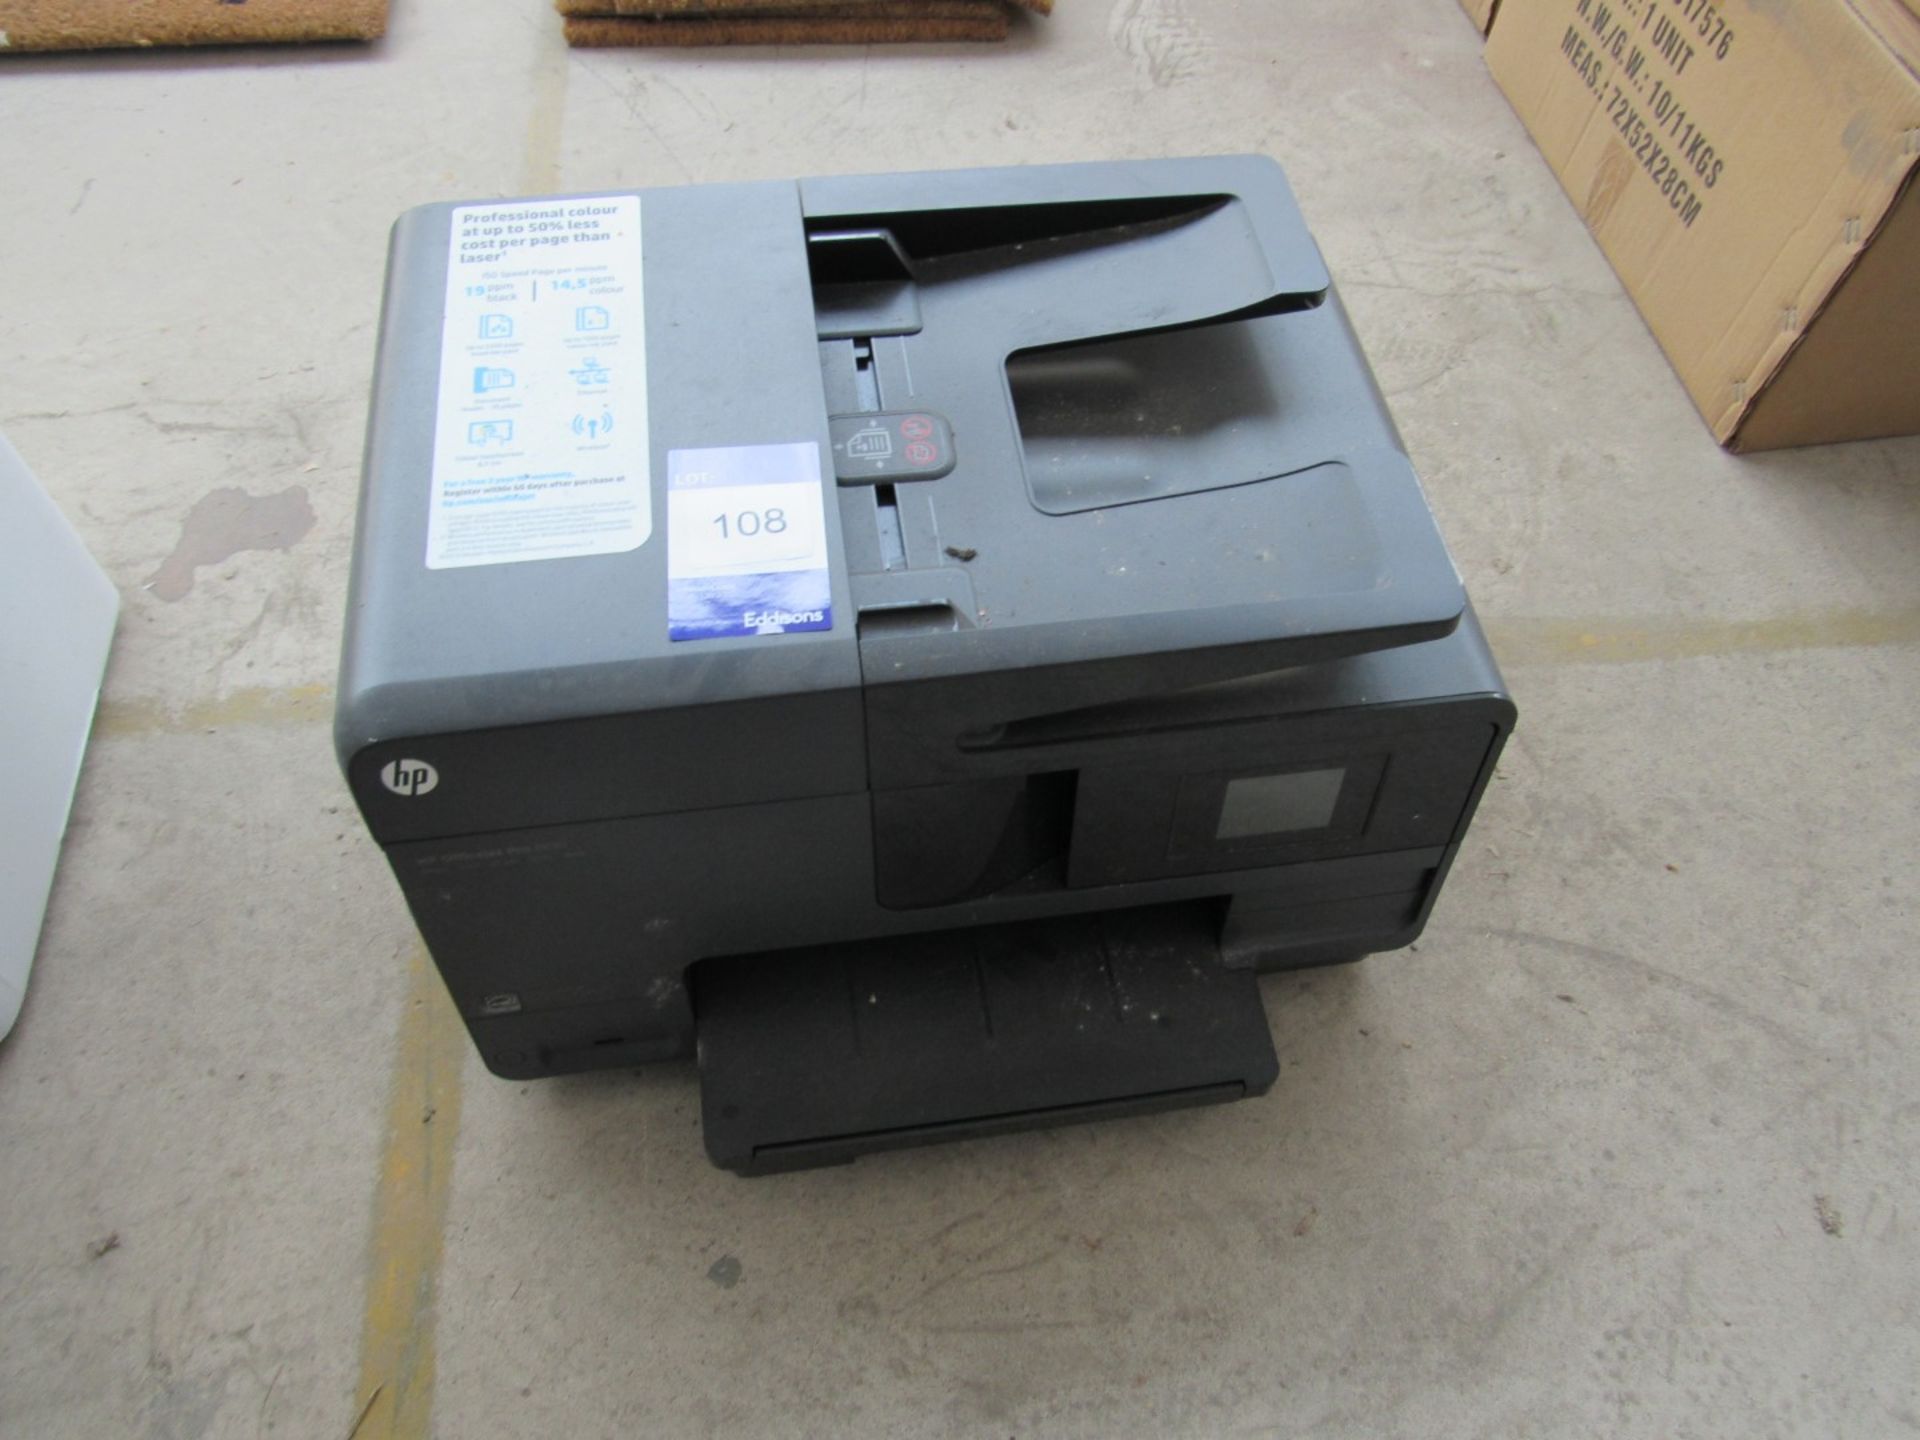 HP Officejet Pro 8610 printer